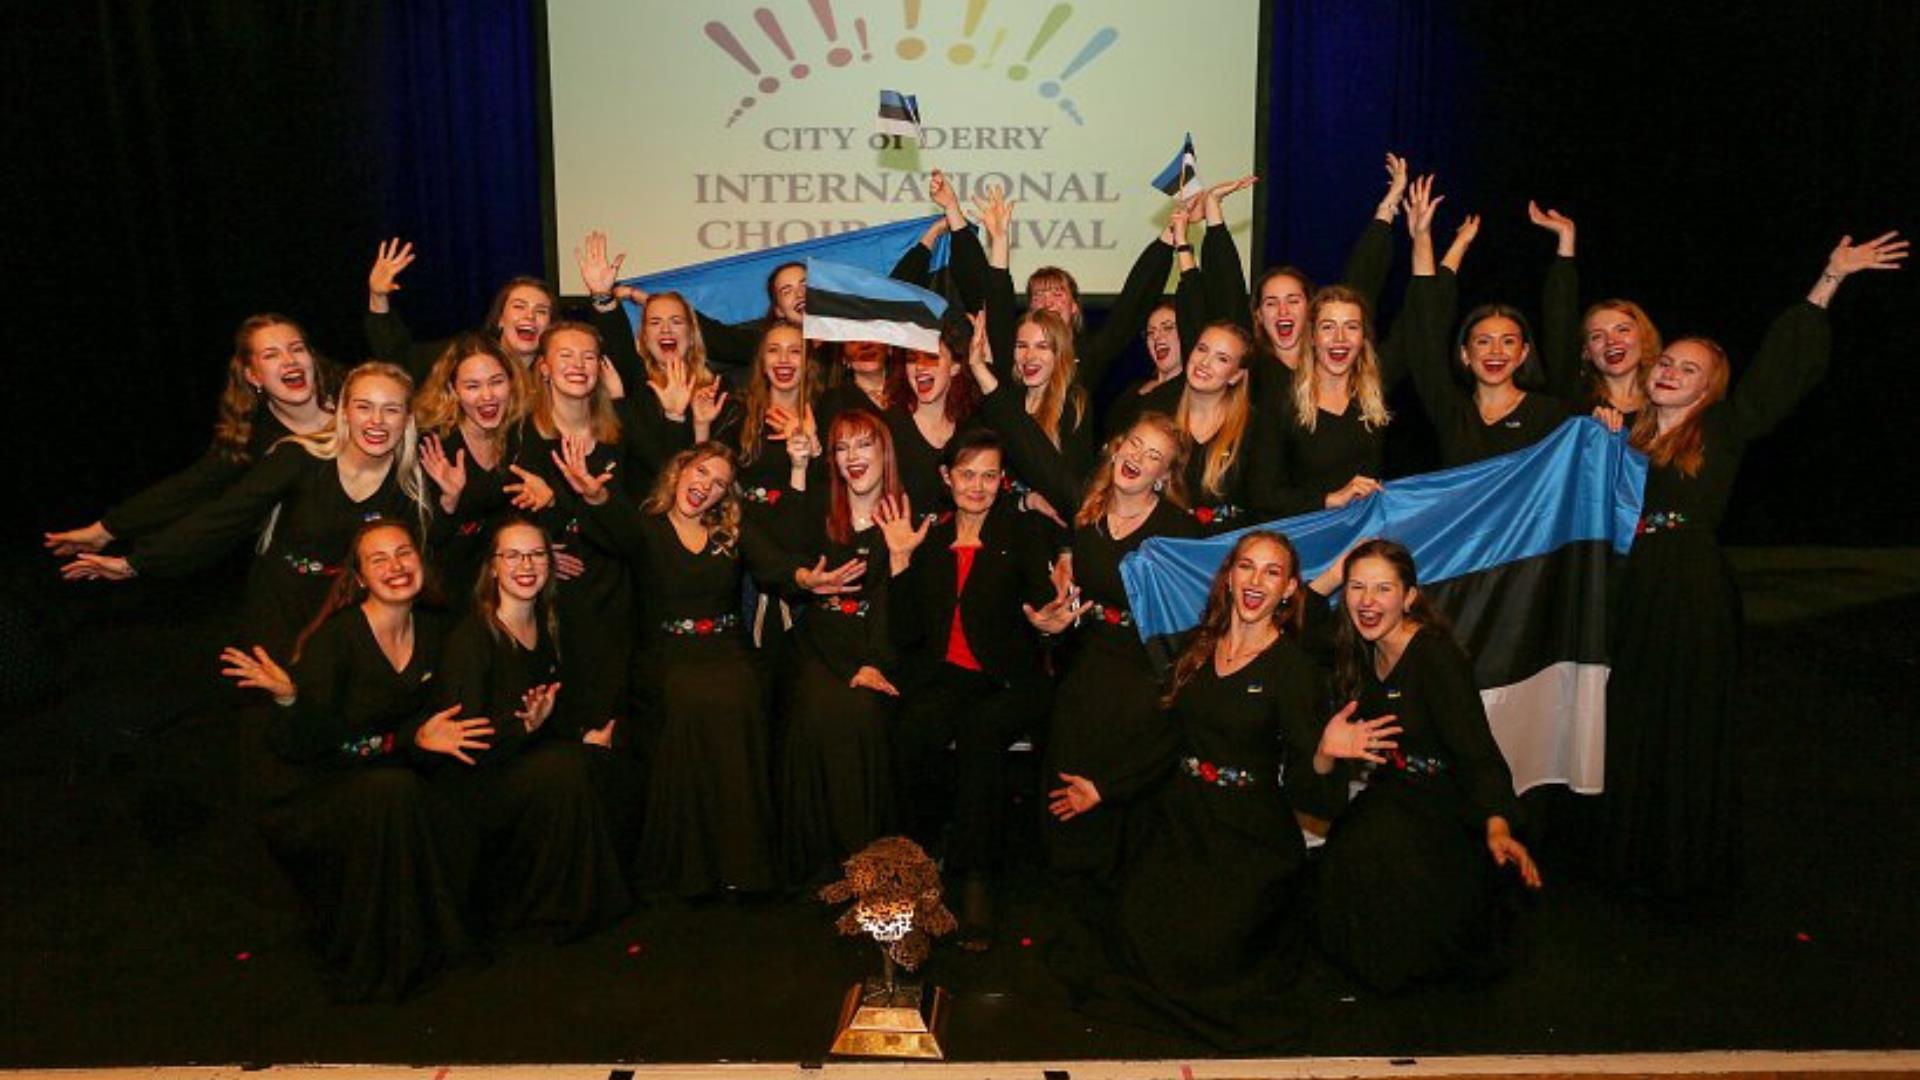 Winners of the City of Derry Choir Festival International Competition 2022 - Eller Girls Choir from Estonia